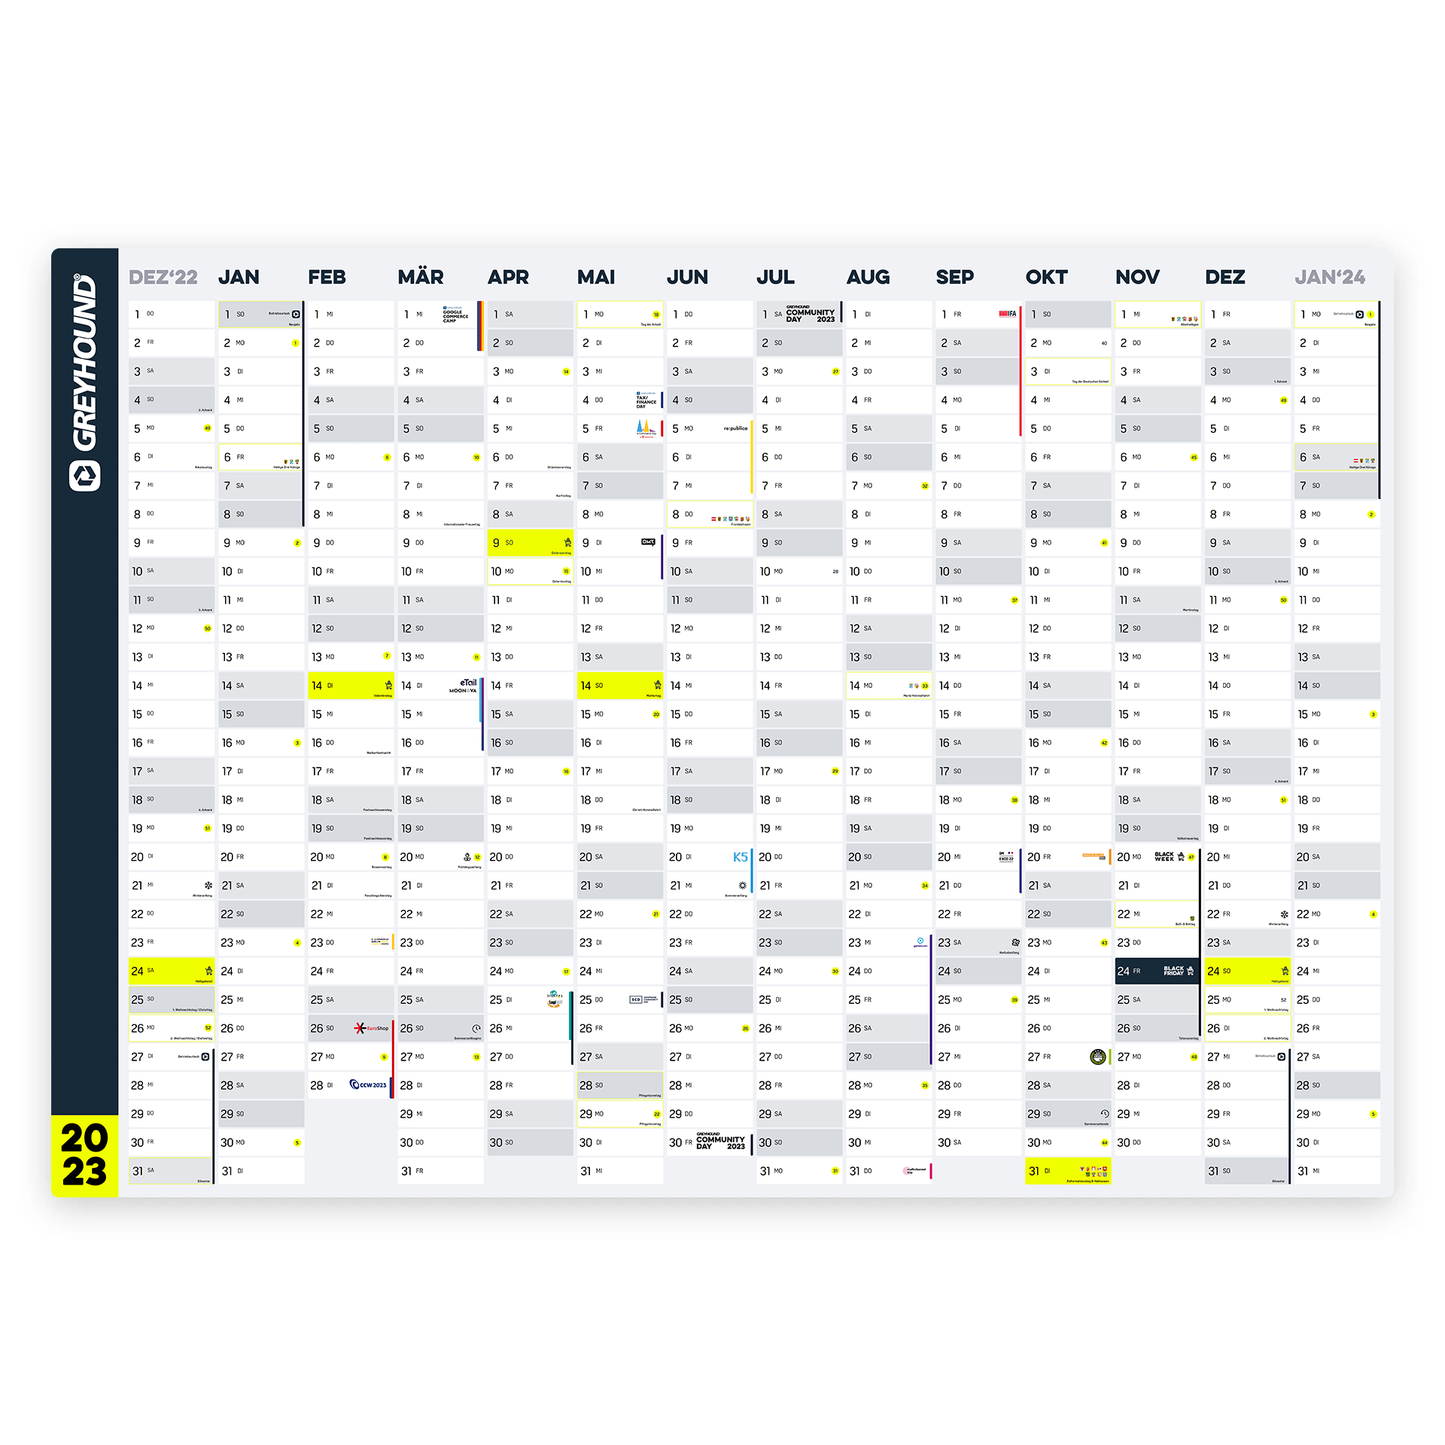 Original E-Commerce Kalender 2023